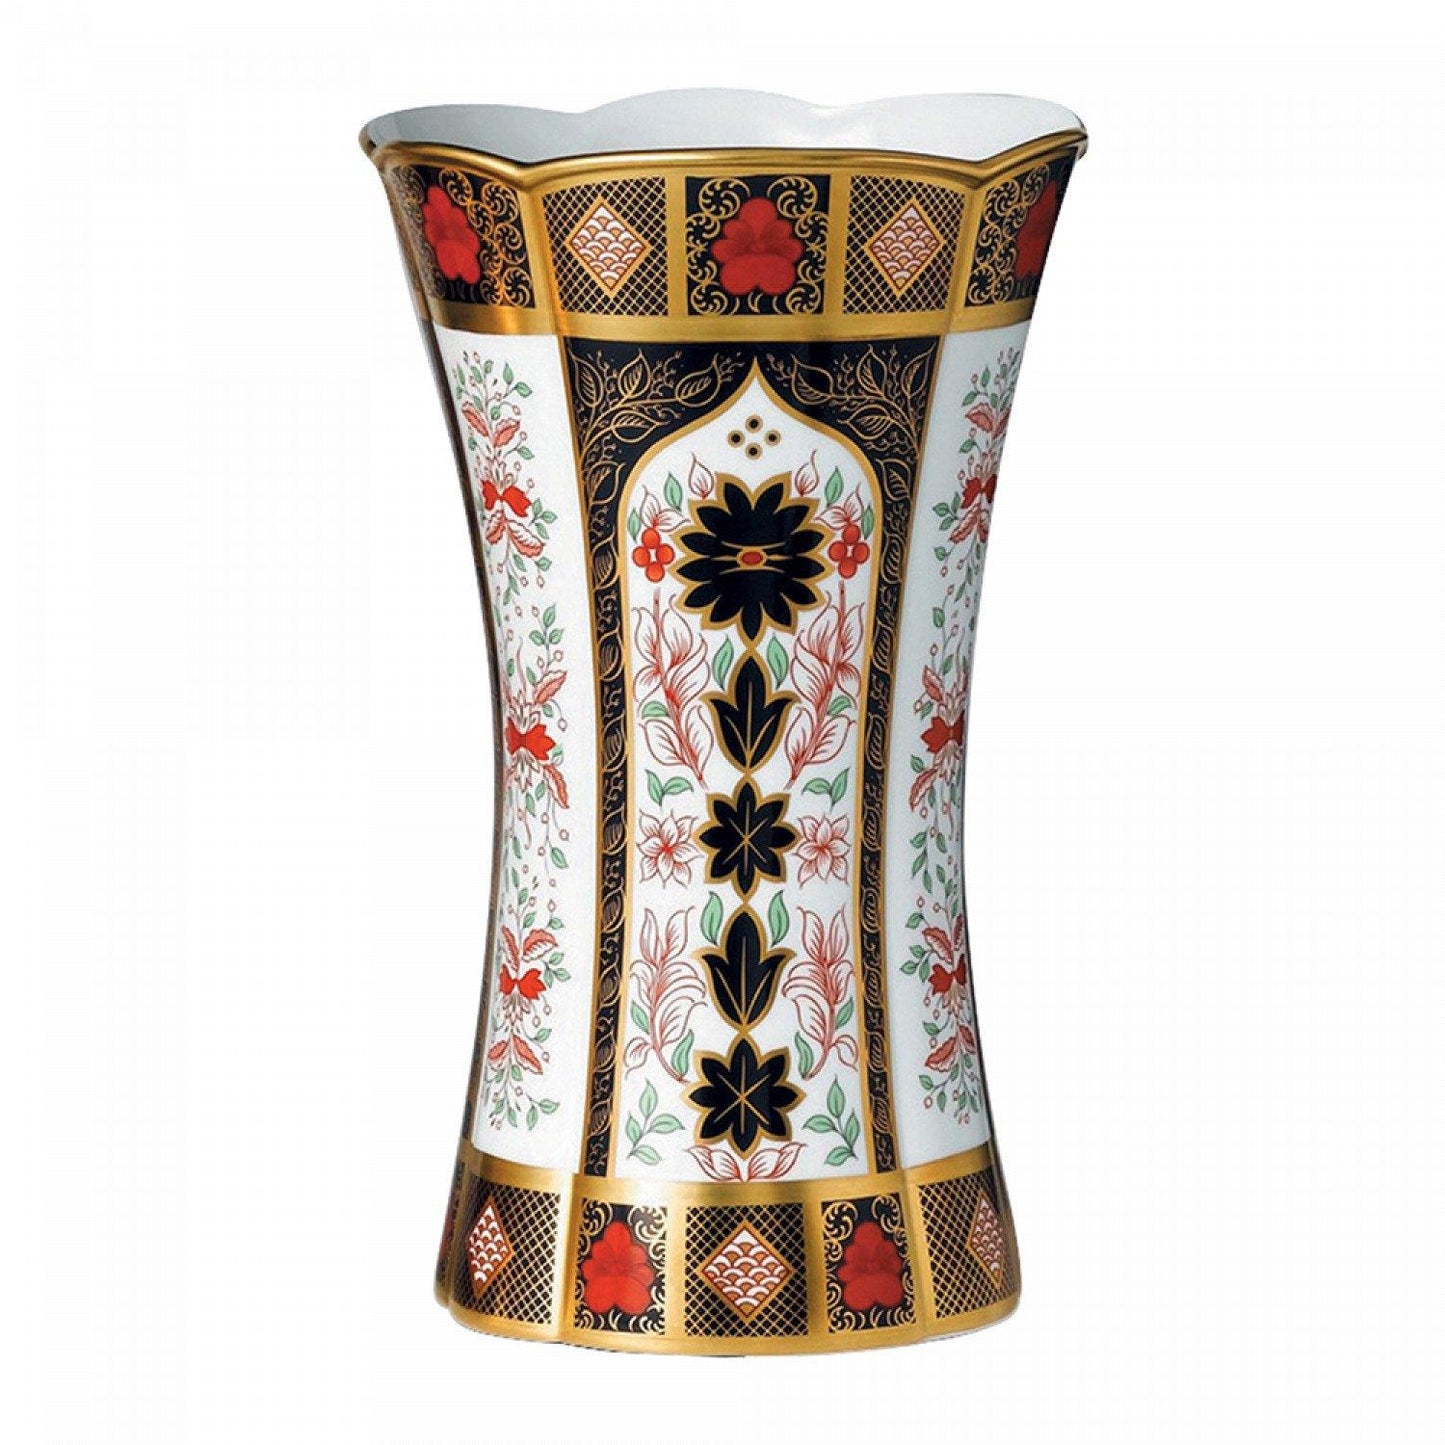 Old Imari Solid Gold Band - Column Vase (Royal Crown Derby) - Gallery Gifts Online 